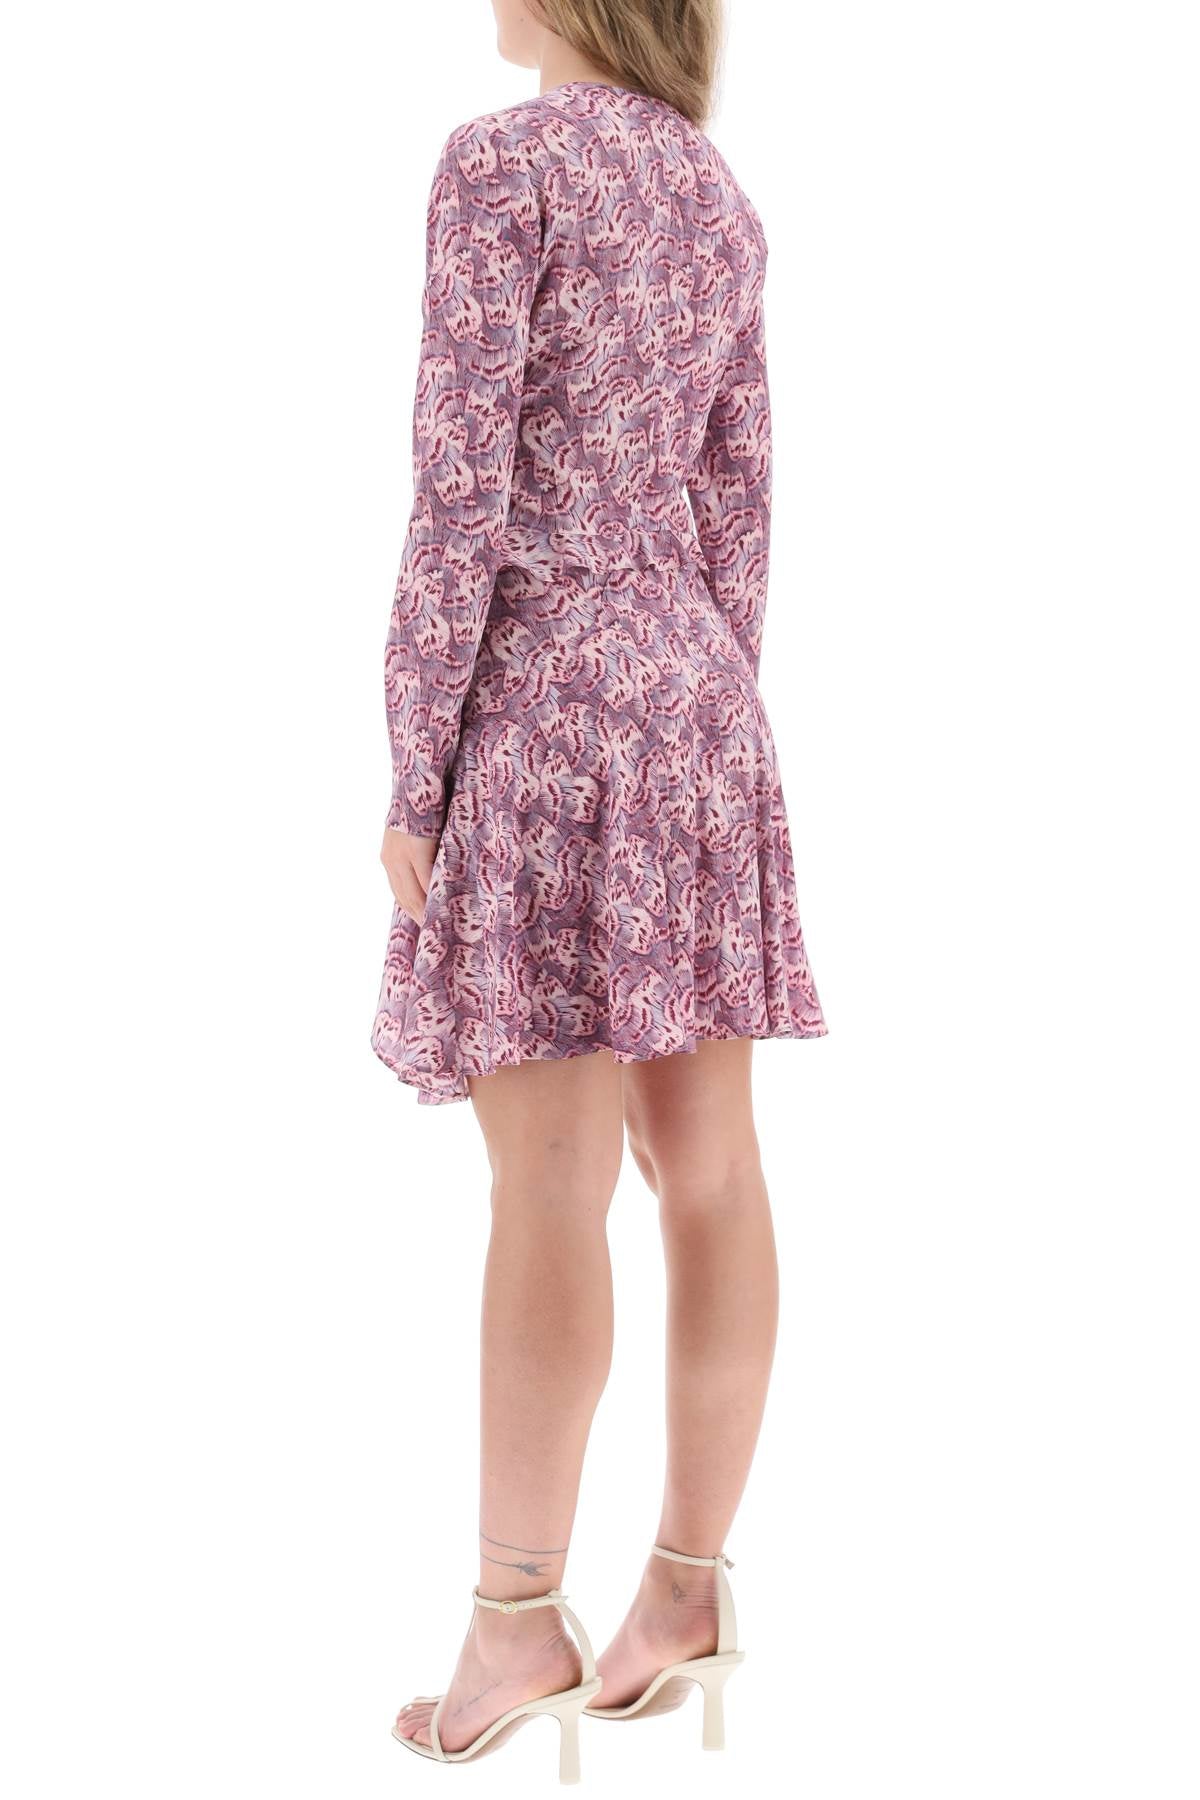 ISABEL MARANT Silk Mini Dress with Asymmetric Skirt and Flirty Details